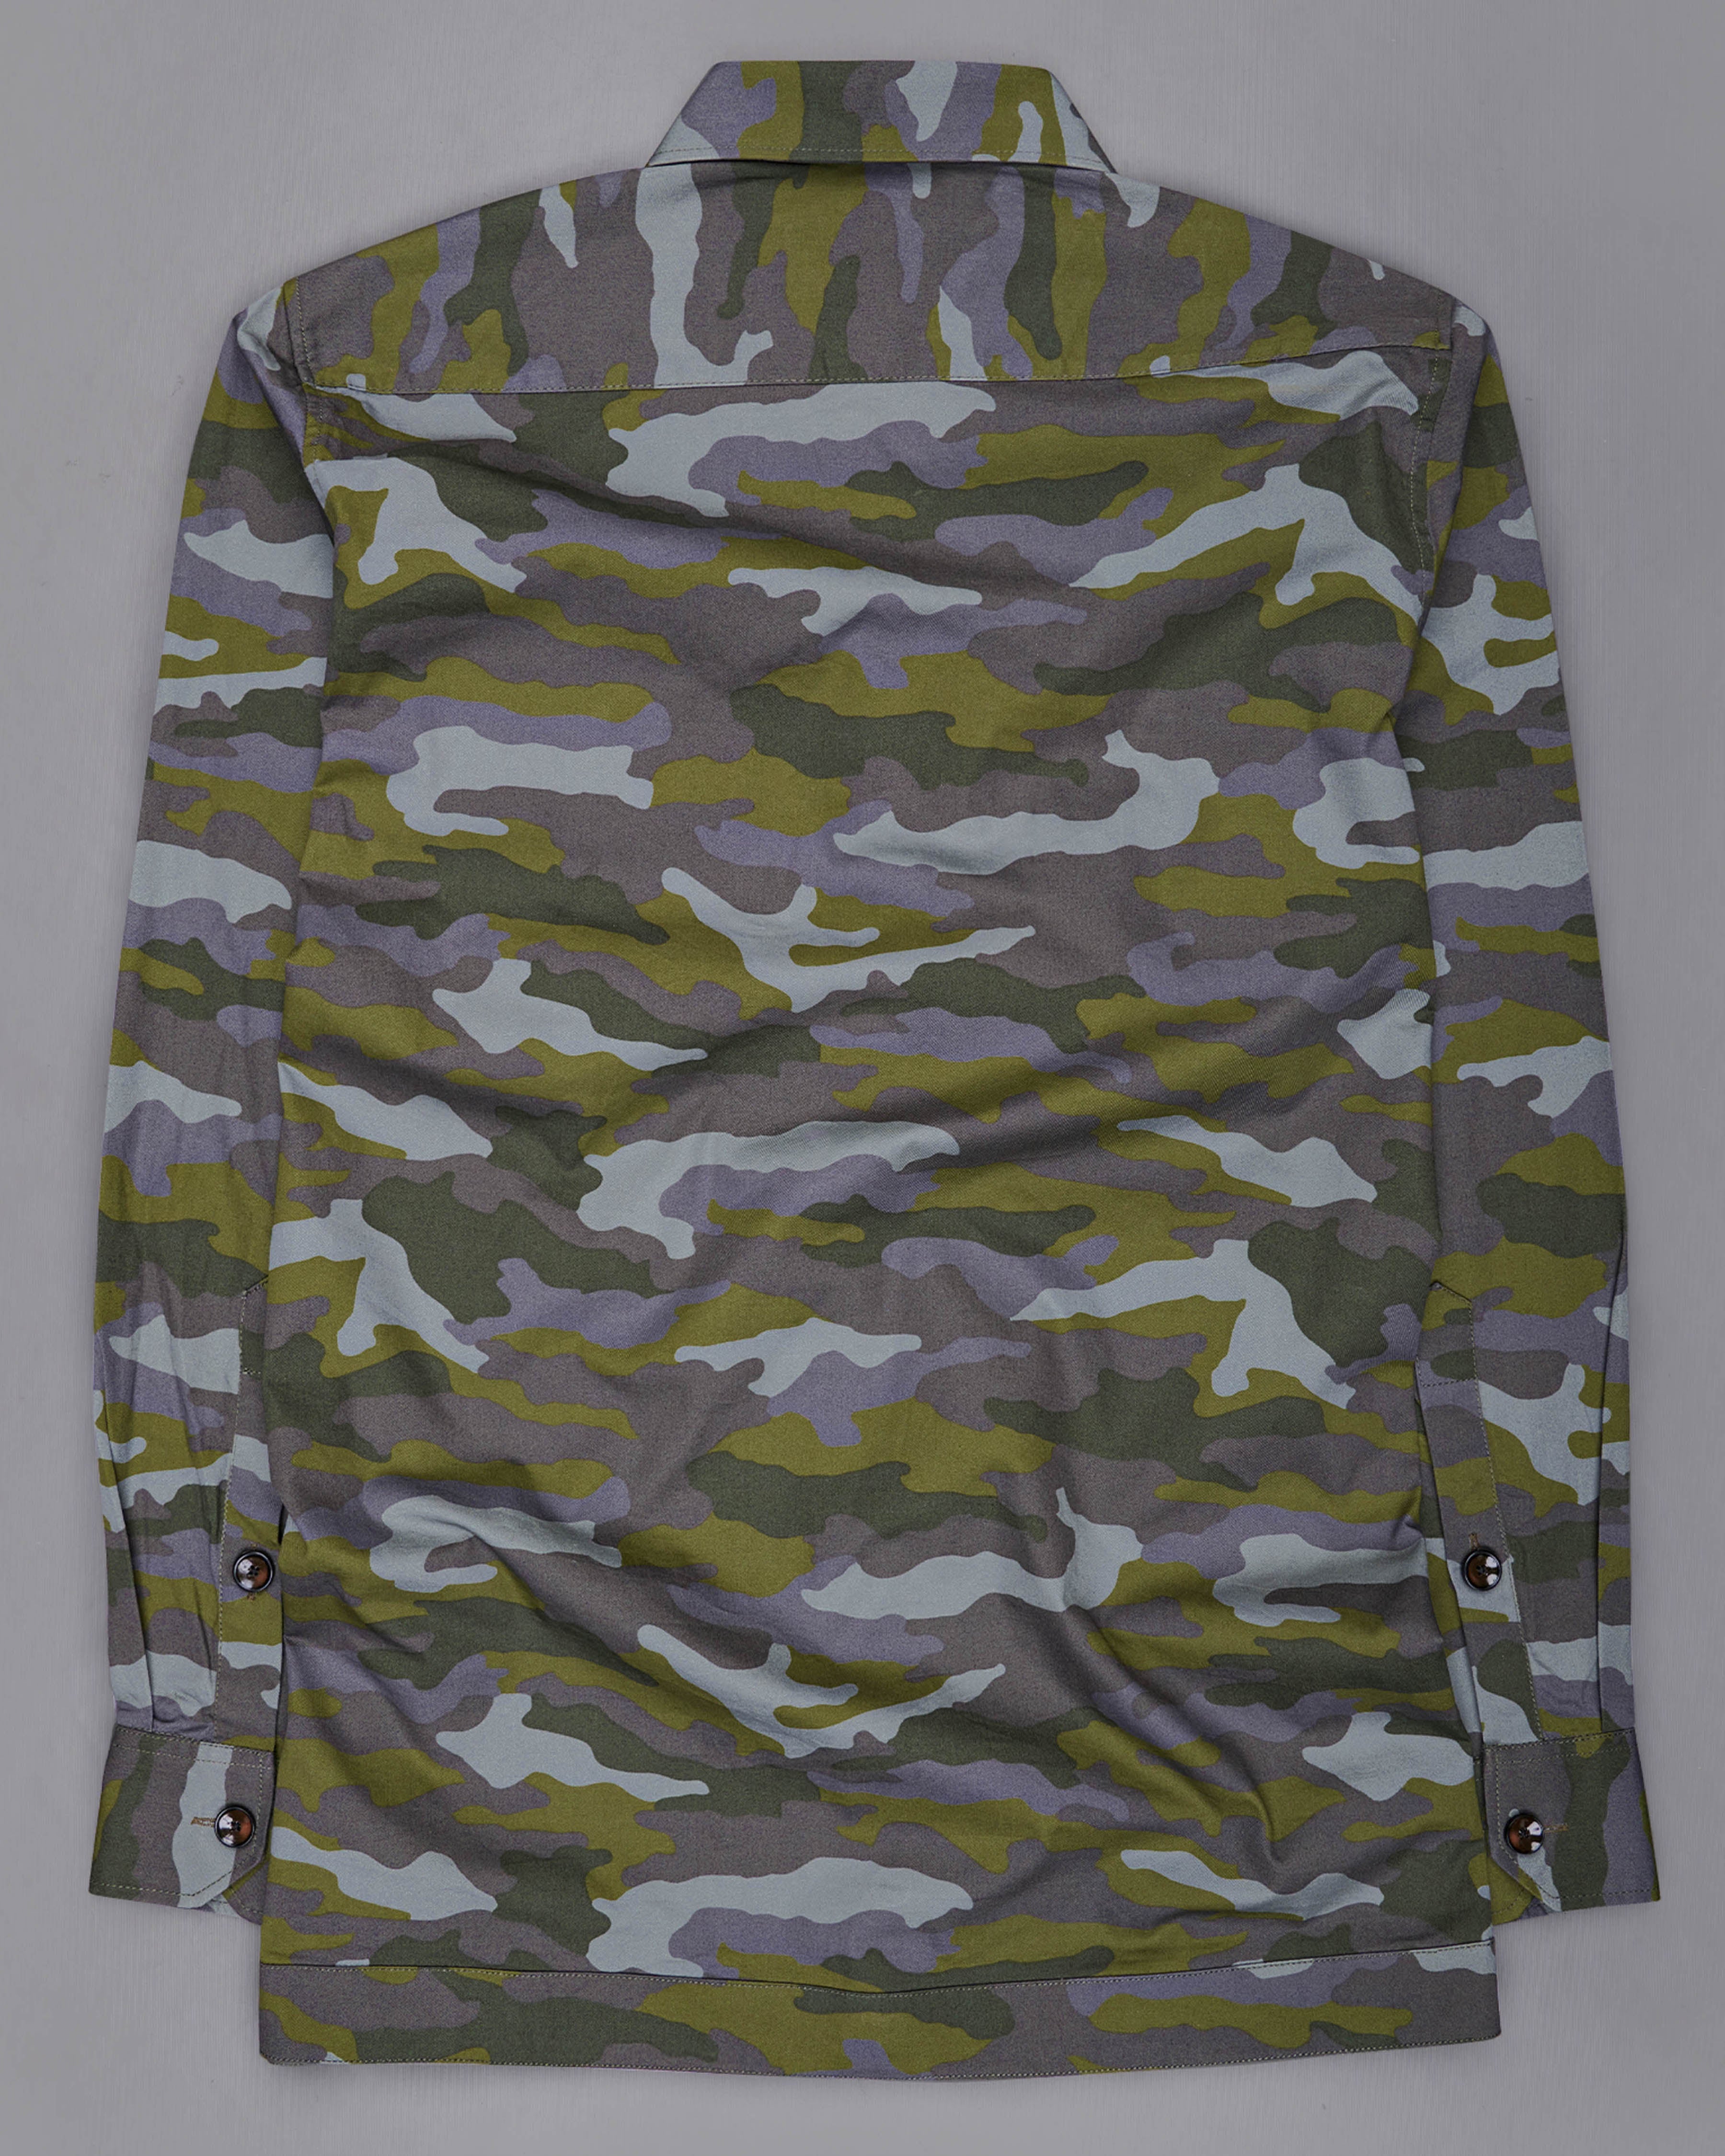 Gravel Gray with Hemlock Green Camouflage Printed Royal Oxford Designer Shirt 8903-P325-38, 8903-P325-H-38,  8903-P325-39,  8903-P325-H-39,  8903-P325-40,  8903-P325-H-40,  8903-P325-42,  8903-P325-H-42,  8903-P325-44,  8903-P325-H-44,  8903-P325-46,  8903-P325-H-46,  8903-P325-48,  8903-P325-H-48,  8903-P325-50,  8903-P325-H-50,  8903-P325-52,  8903-P325-H-52